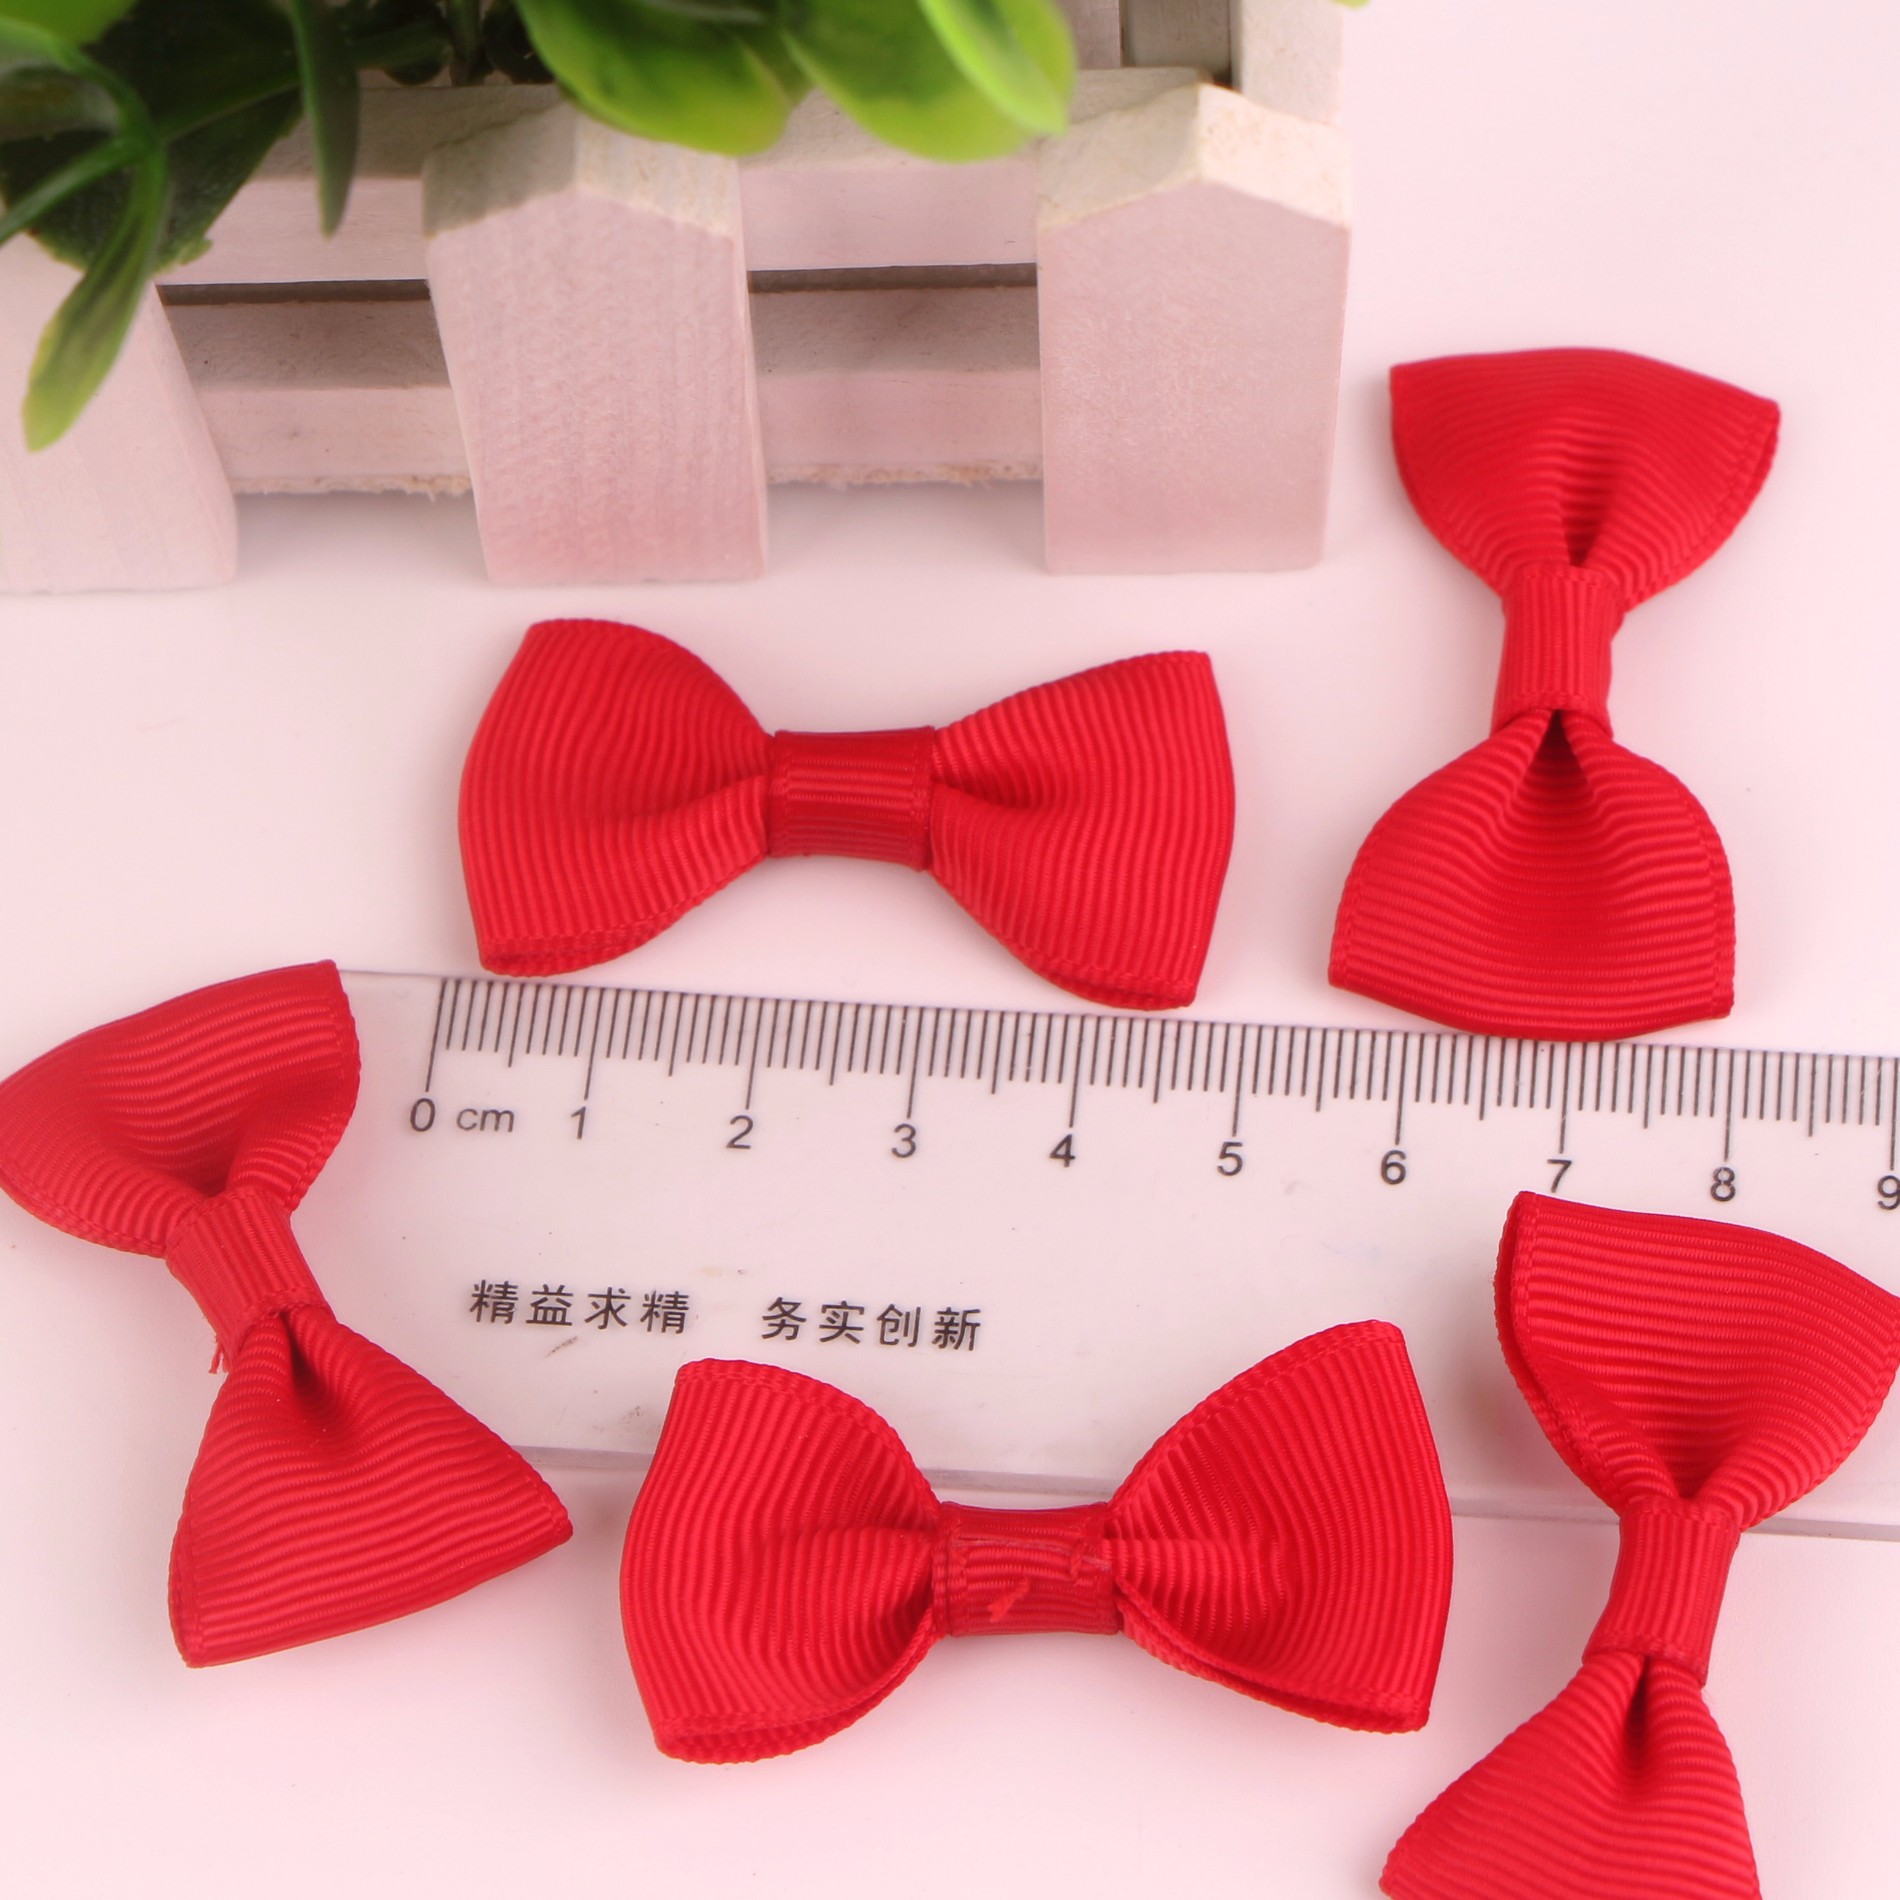 Mini satin and grosgrain ribbon for bows